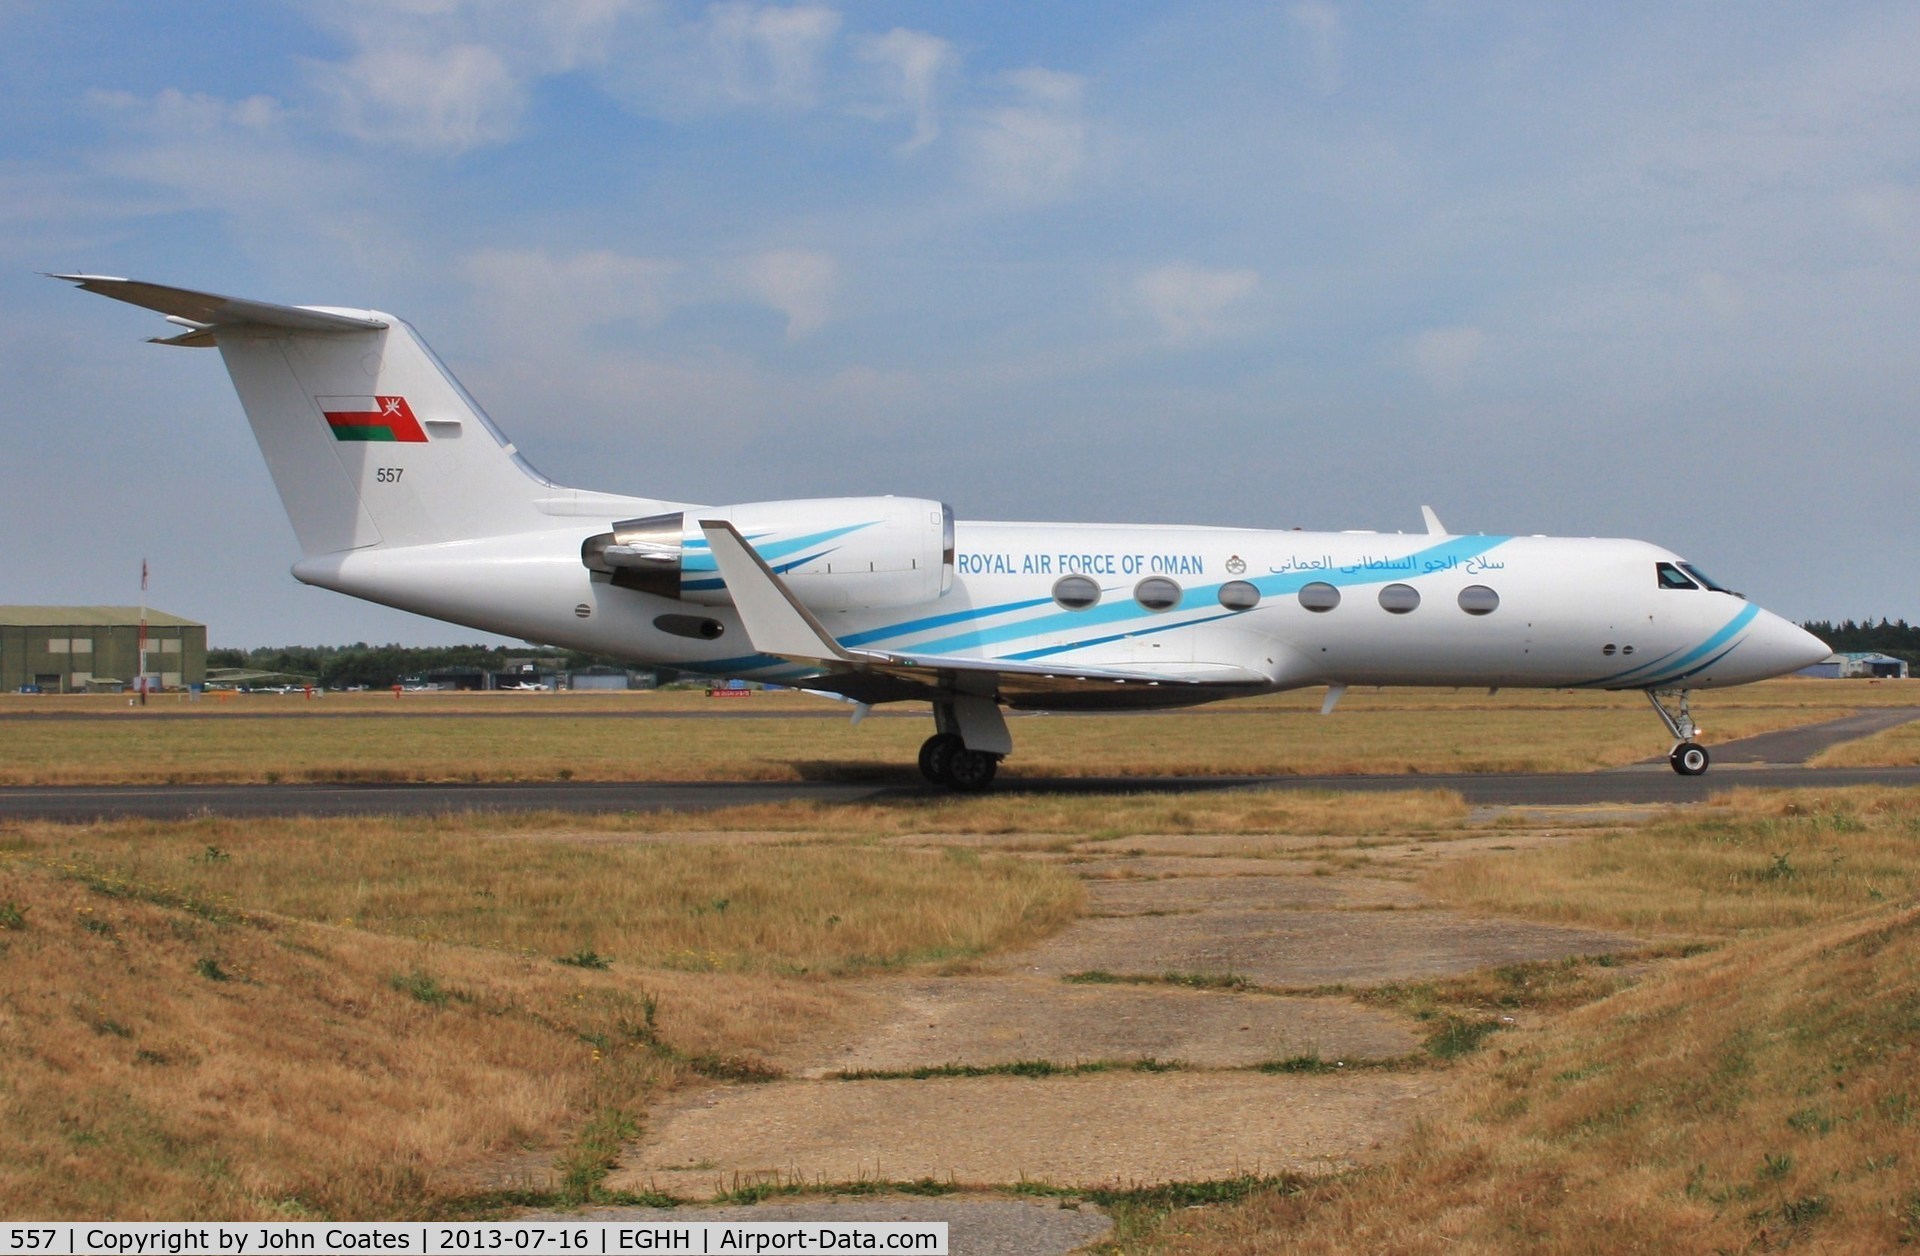 557, 1991 Gulfstream Aerospace Gulfstream IV C/N 1168, Calling in on way to RIAT 2013 static park.